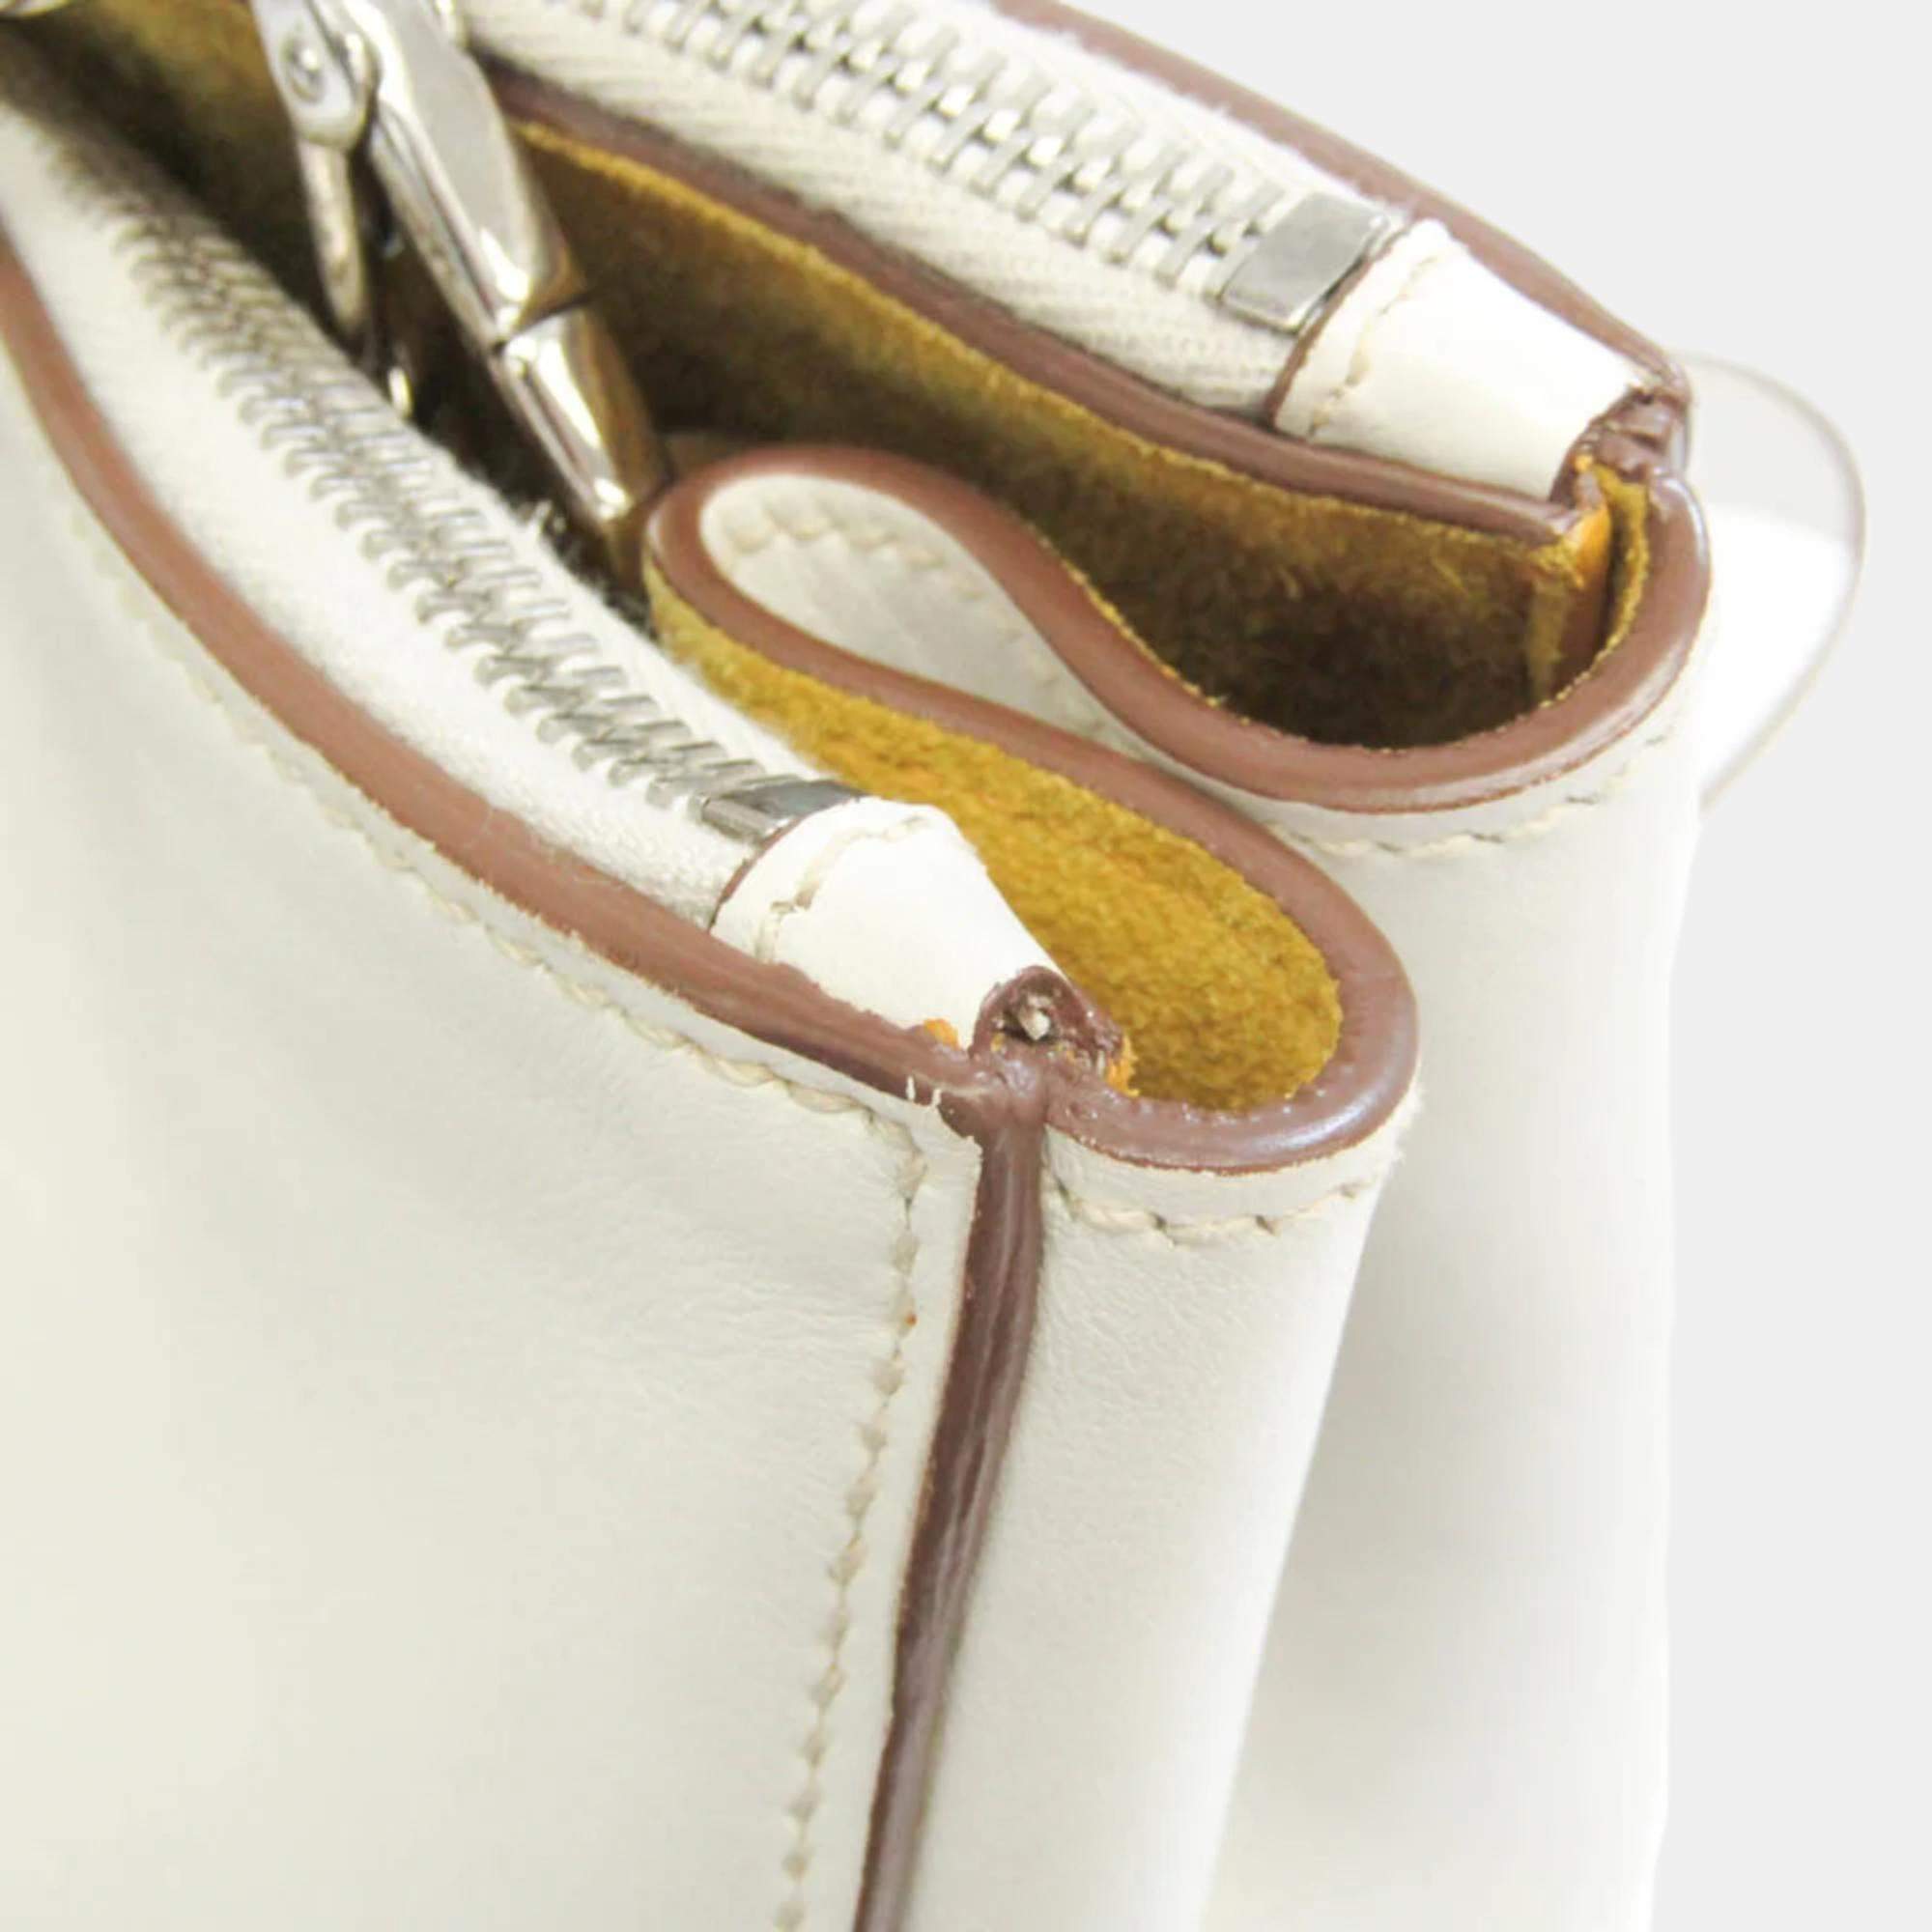 Tan Prada Extra Large Saffiano Lux Galleria Double Zip Tote Handbag –  Designer Revival